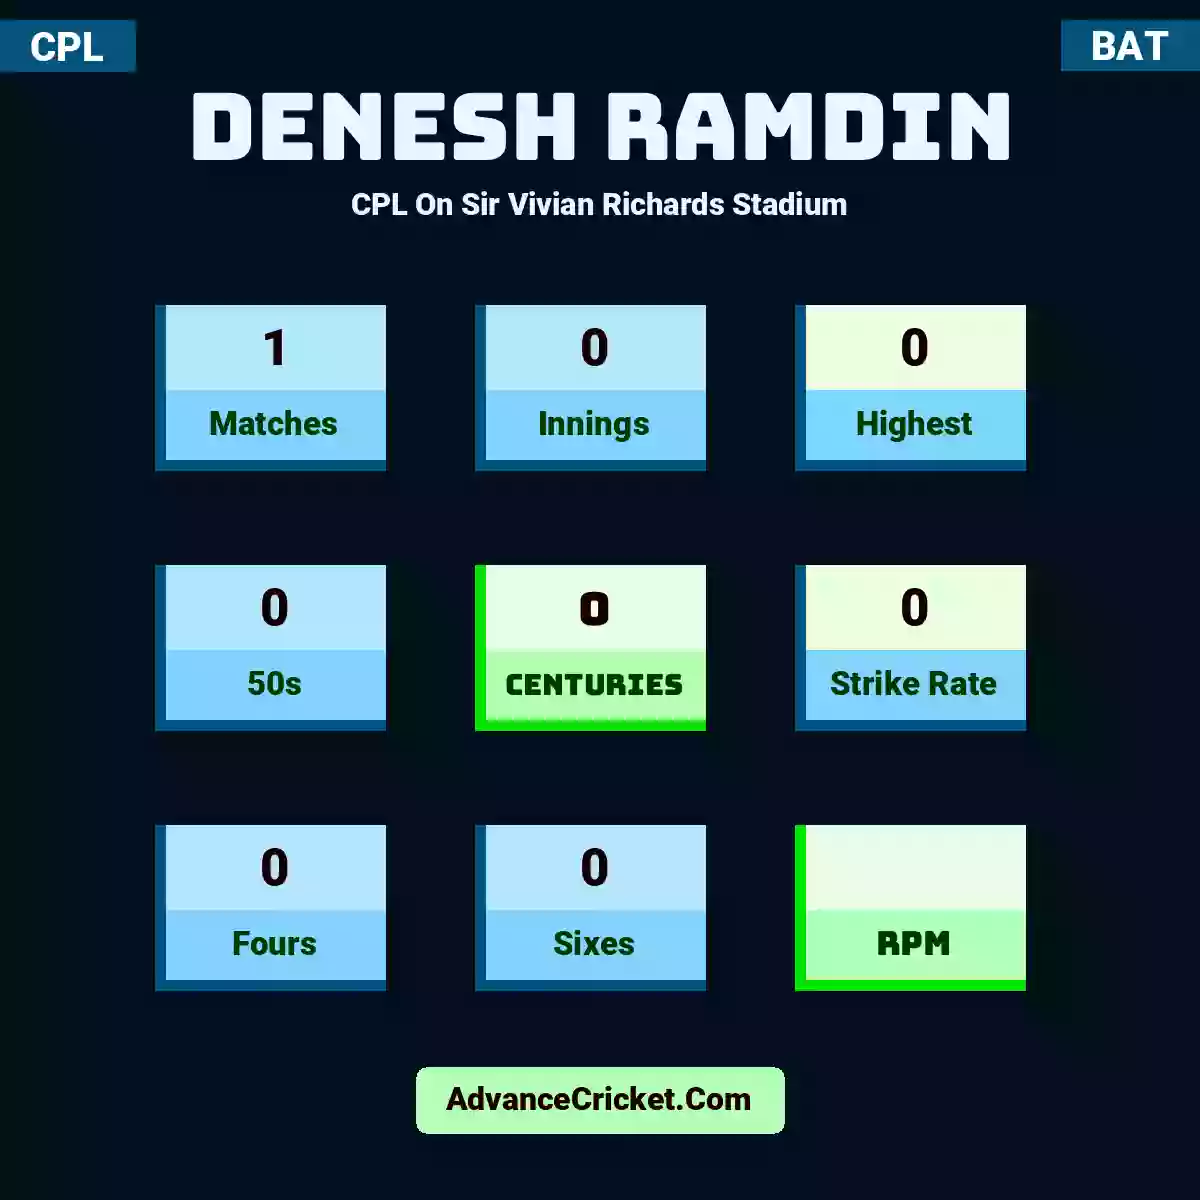 Denesh Ramdin CPL  On Sir Vivian Richards Stadium, Denesh Ramdin played 1 matches, scored 0 runs as highest, 0 half-centuries, and 0 centuries, with a strike rate of 0. D.Ramdin hit 0 fours and 0 sixes.